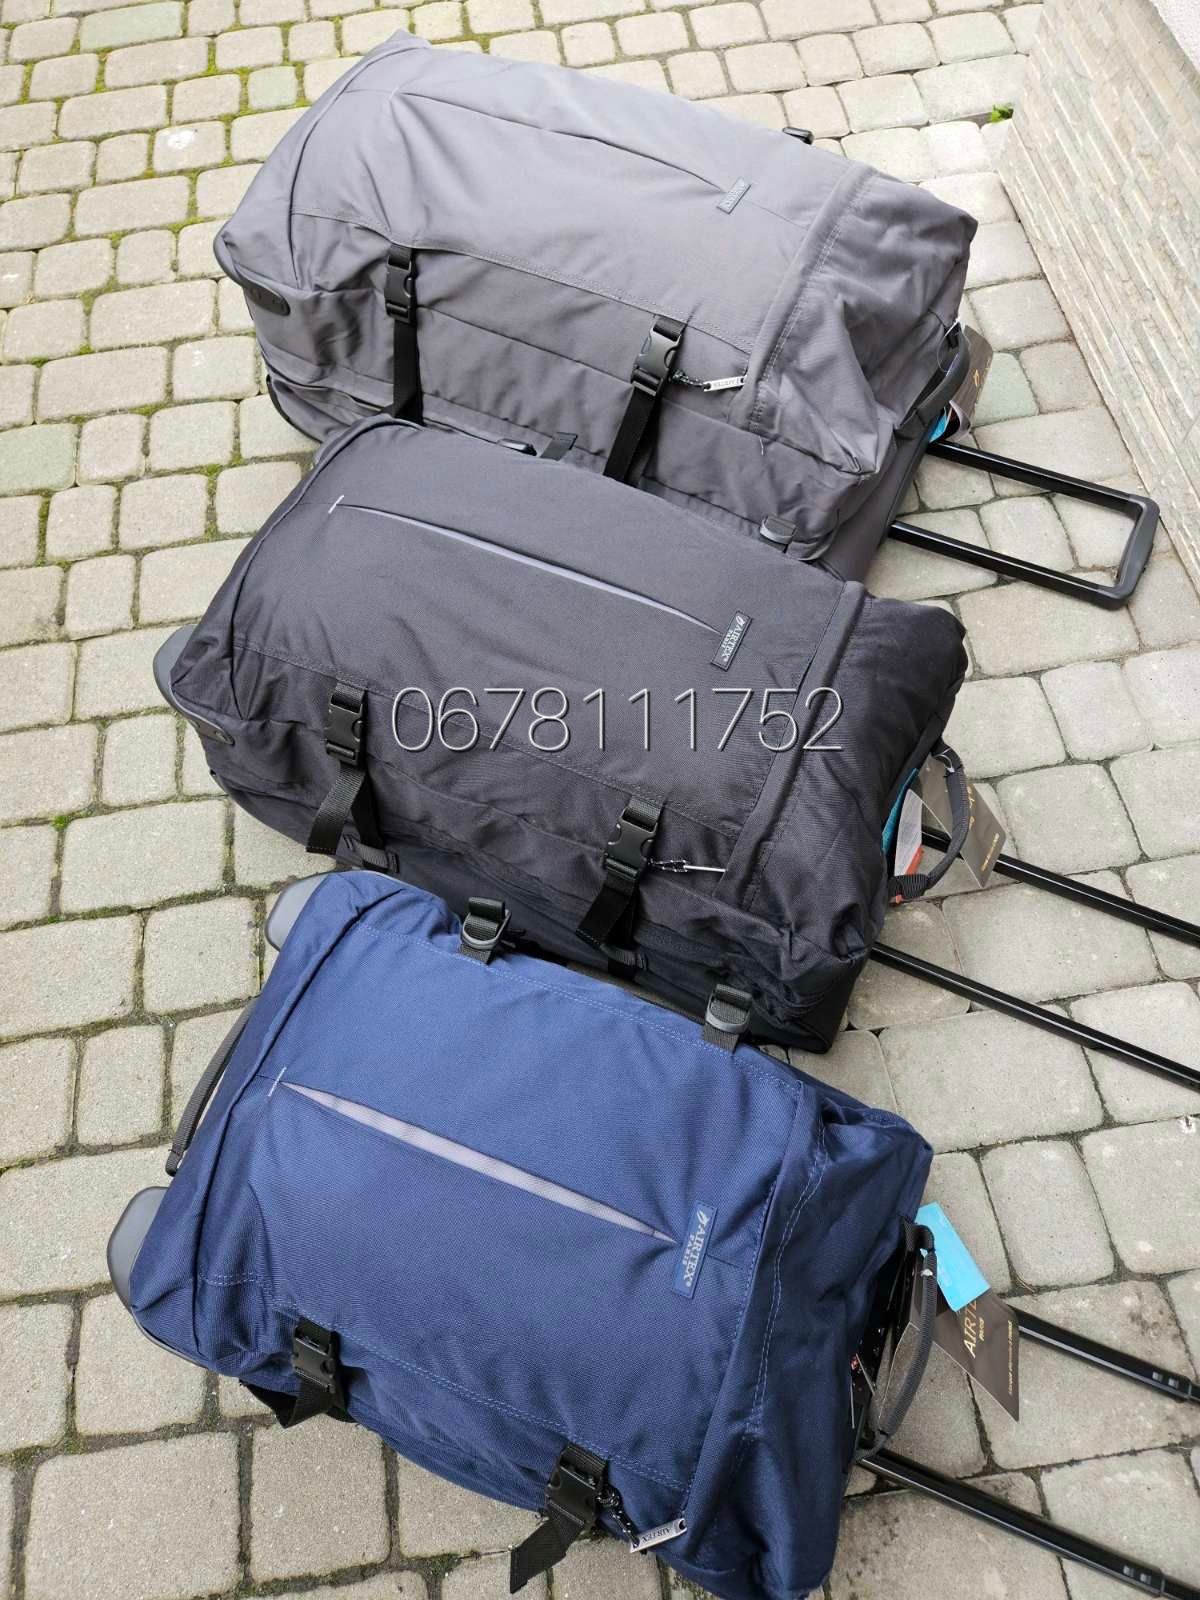 AIRTEX 827 Франція валізи чемоданы сумки на колесах